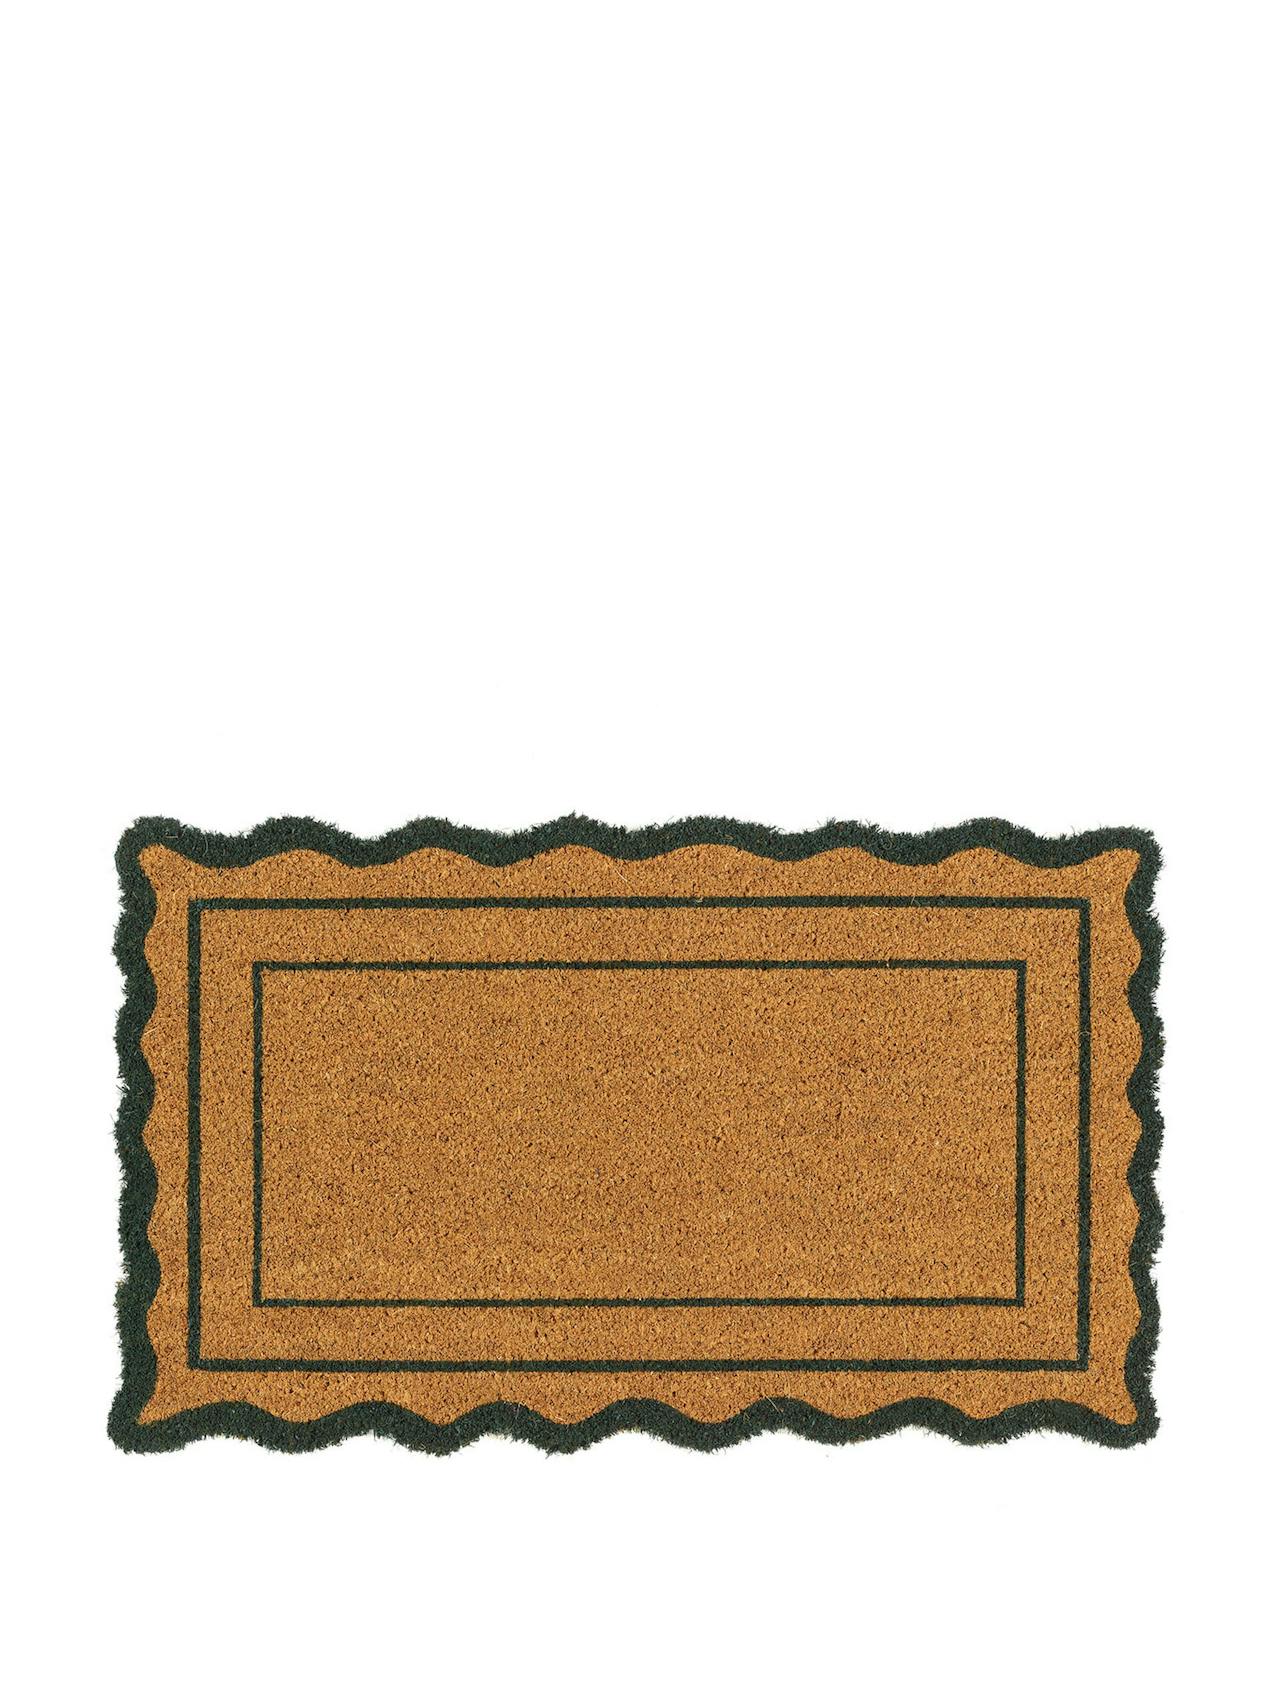 Green scallop border doormat